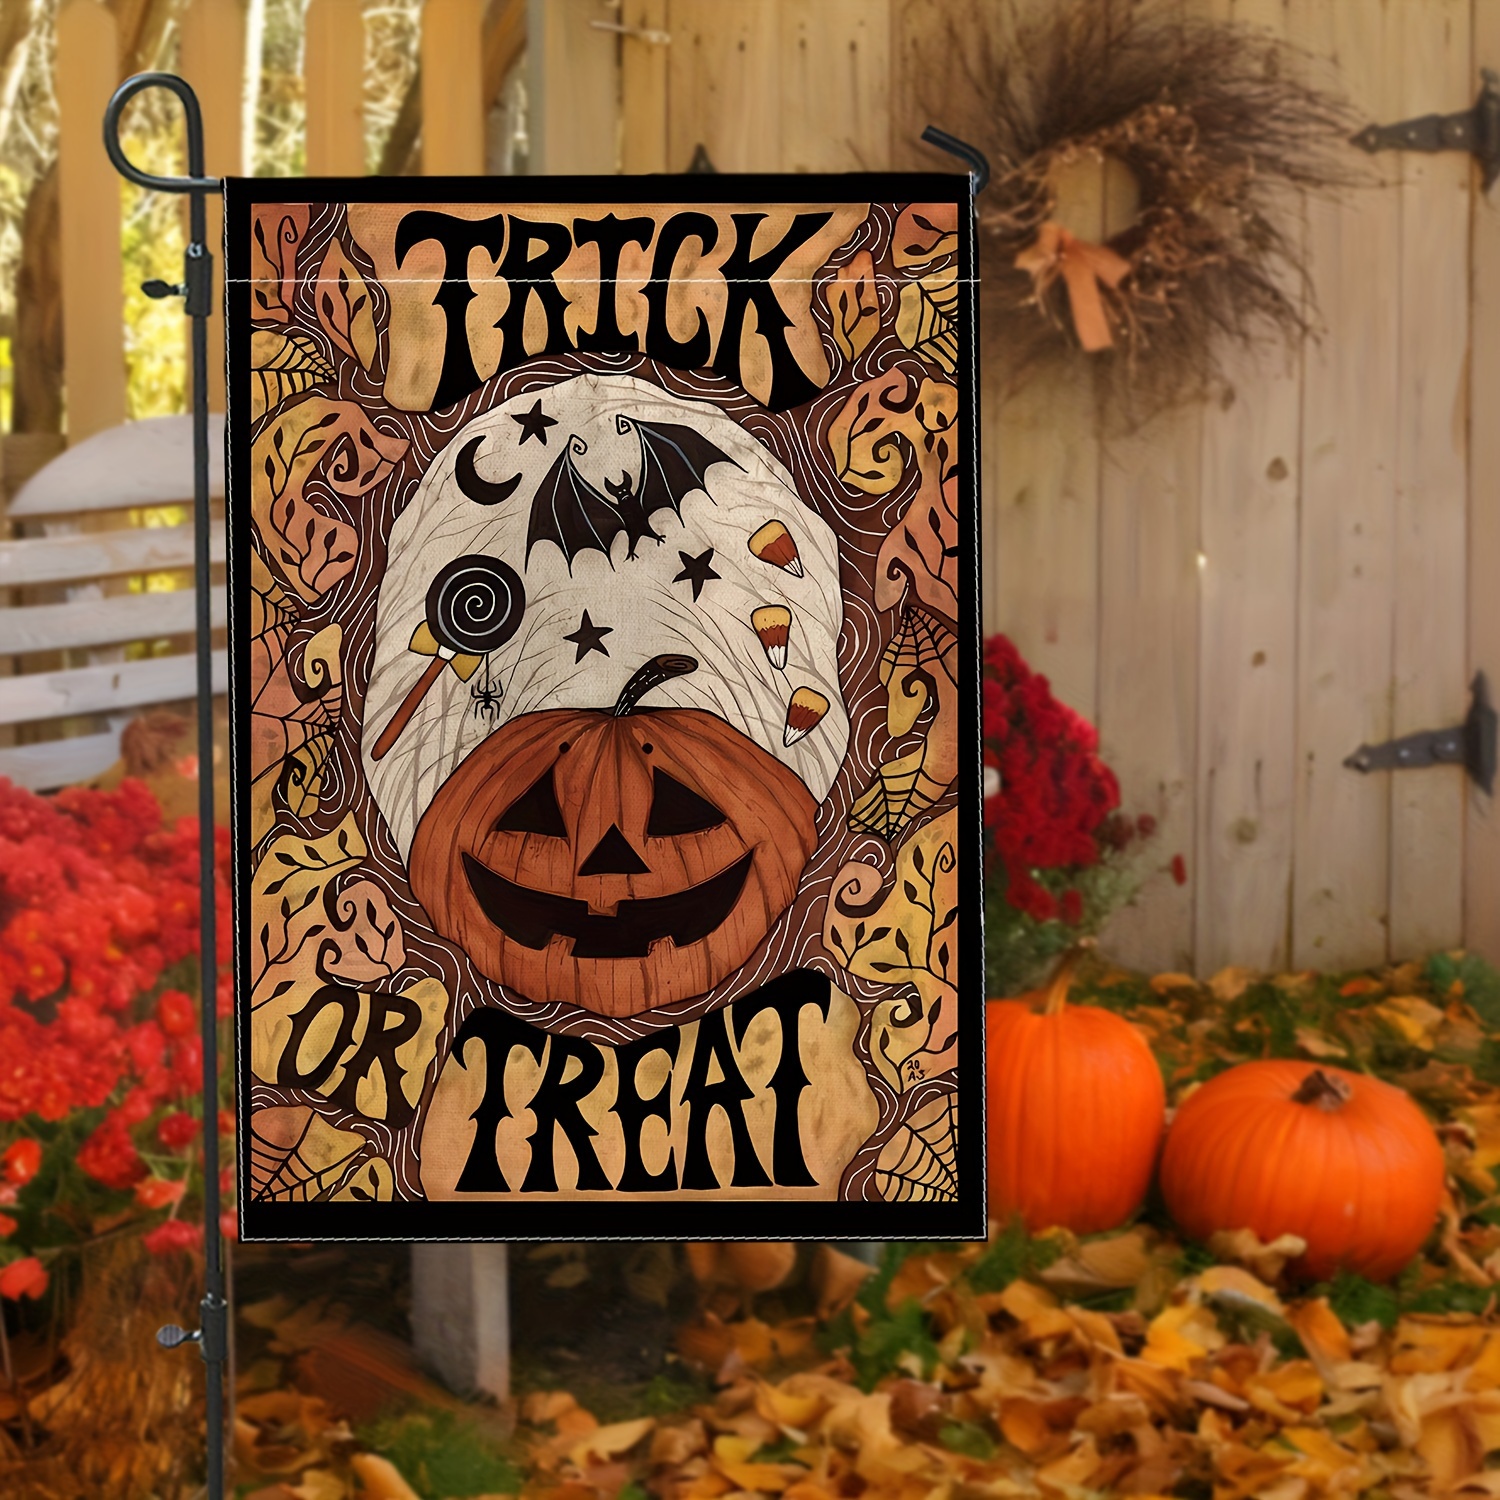 

Spooky Vintage Pumpkin & Bat Halloween Garden Flag - Double-sided, Durable Linen, 12x18 Inches - Perfect For Outdoor Decor